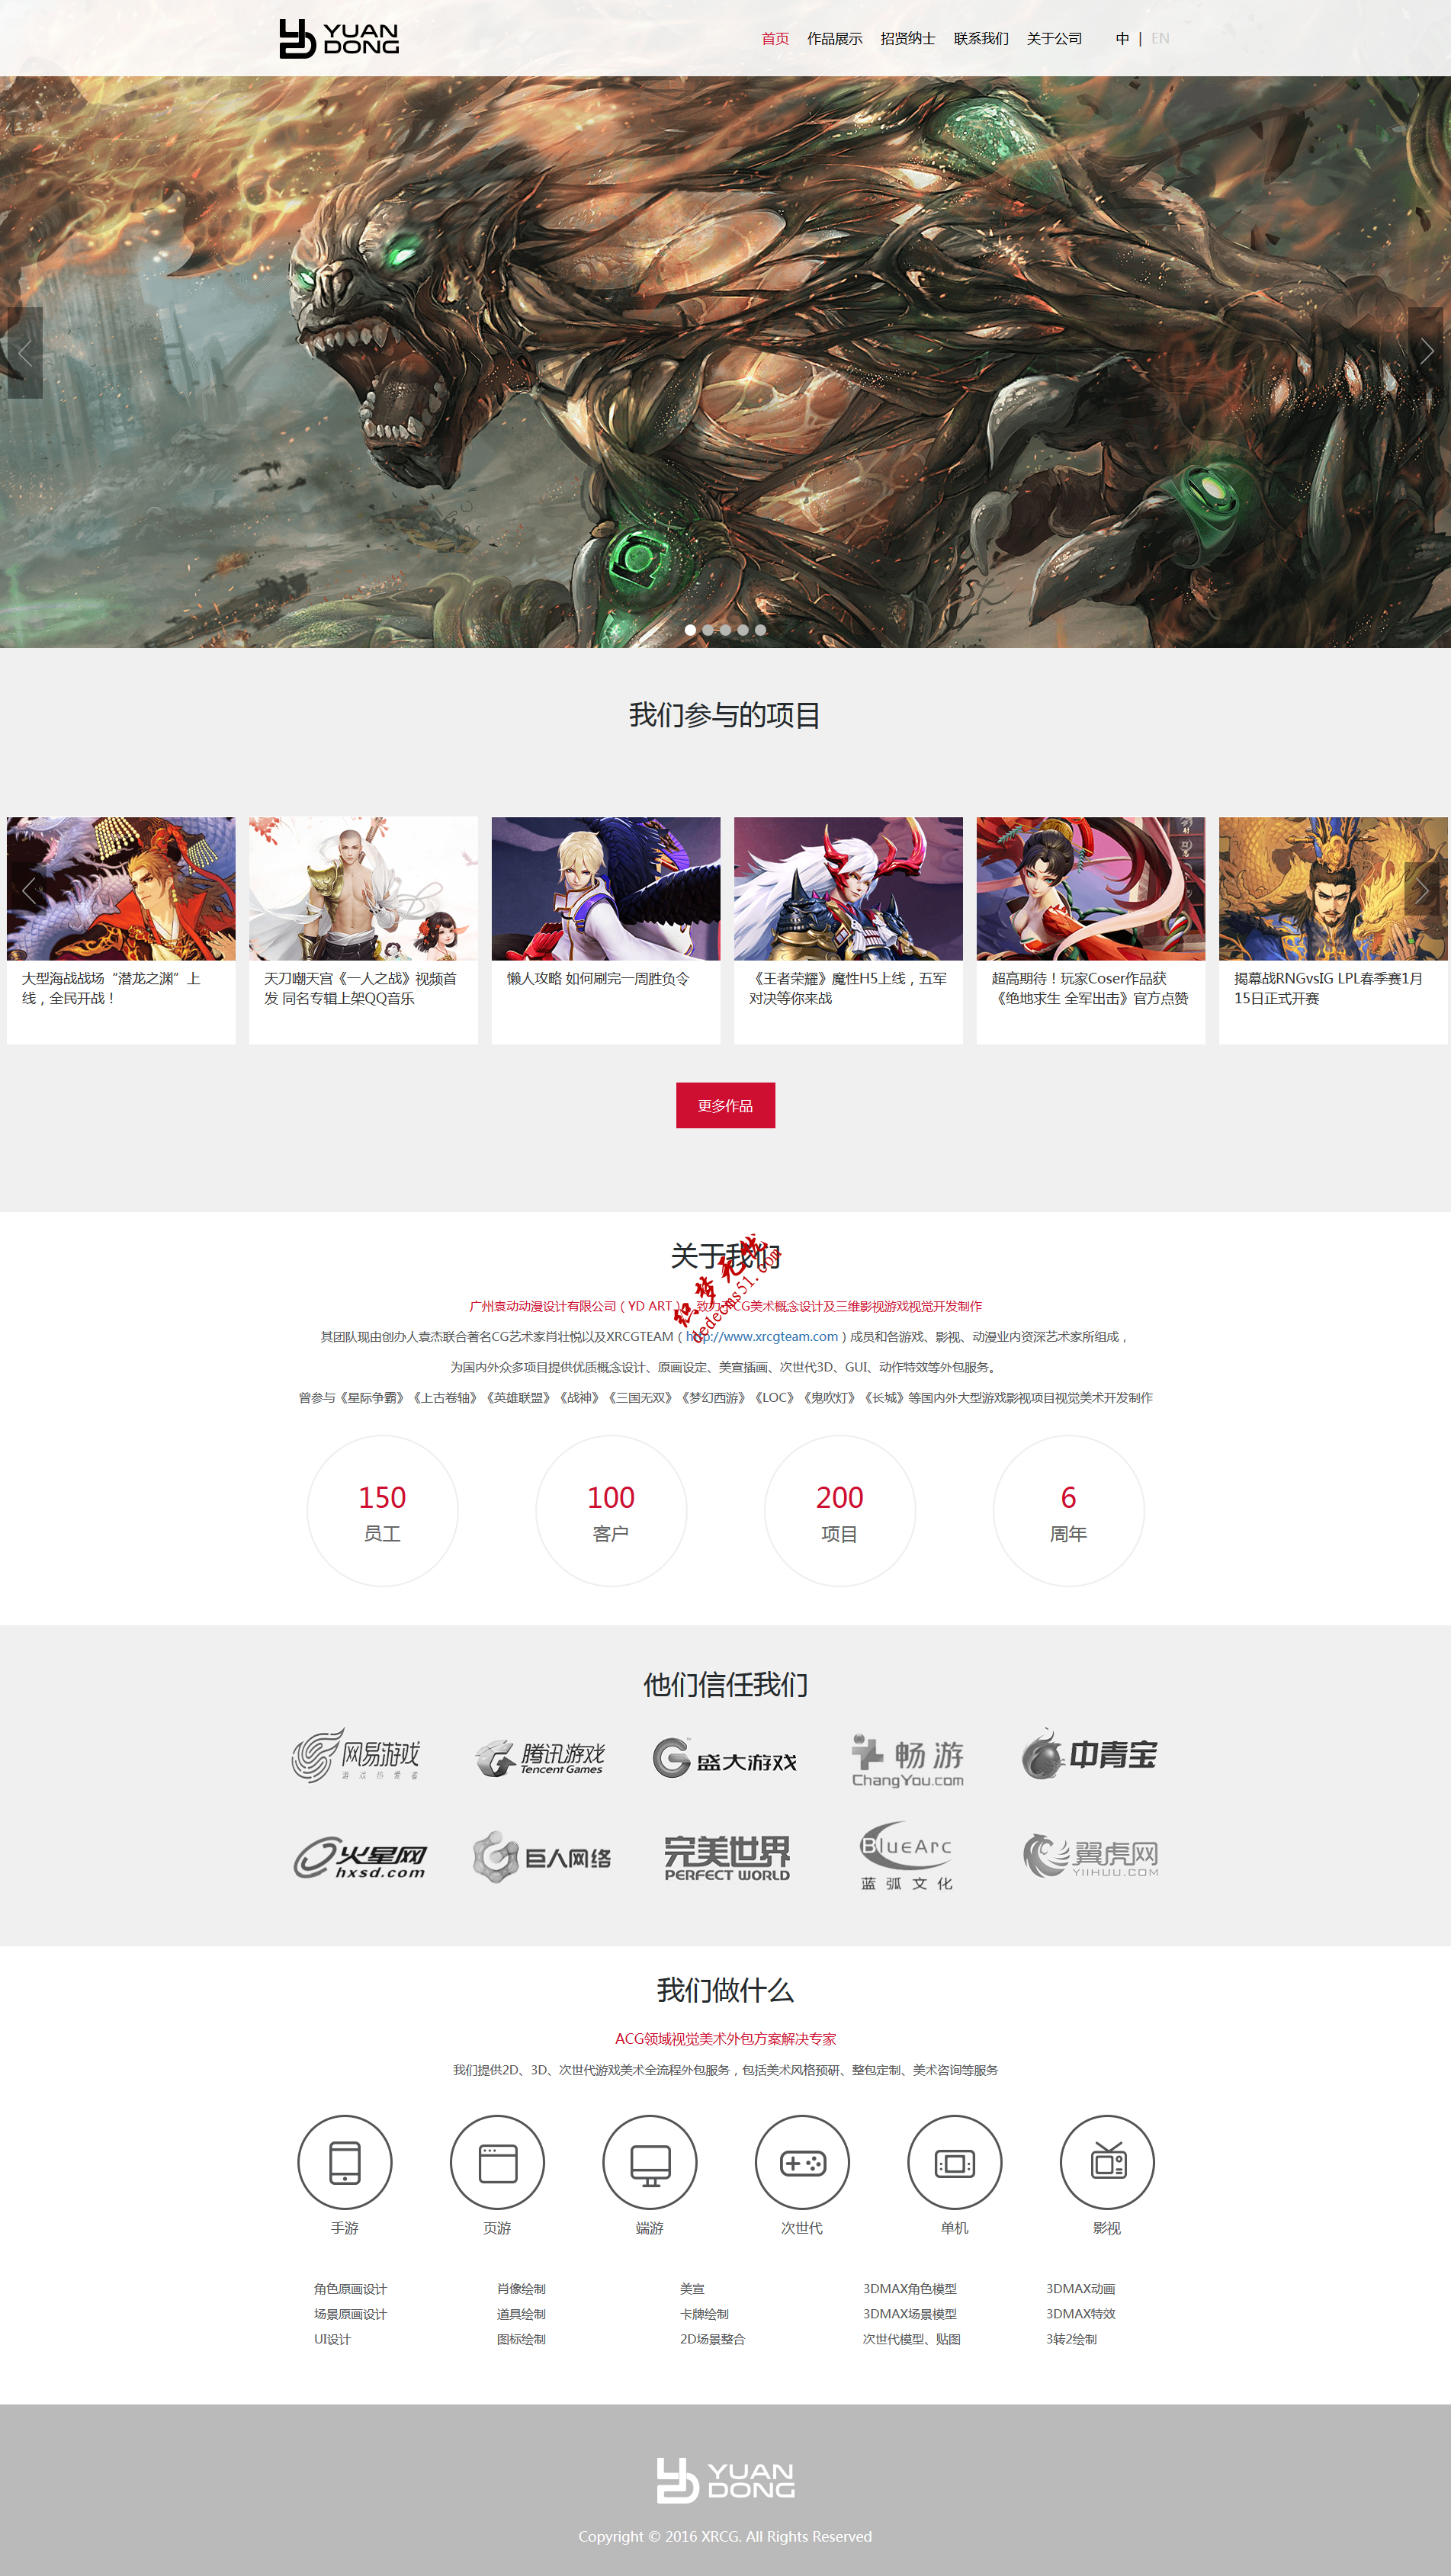 html5中英双语游戏设计公司html网站模板下载